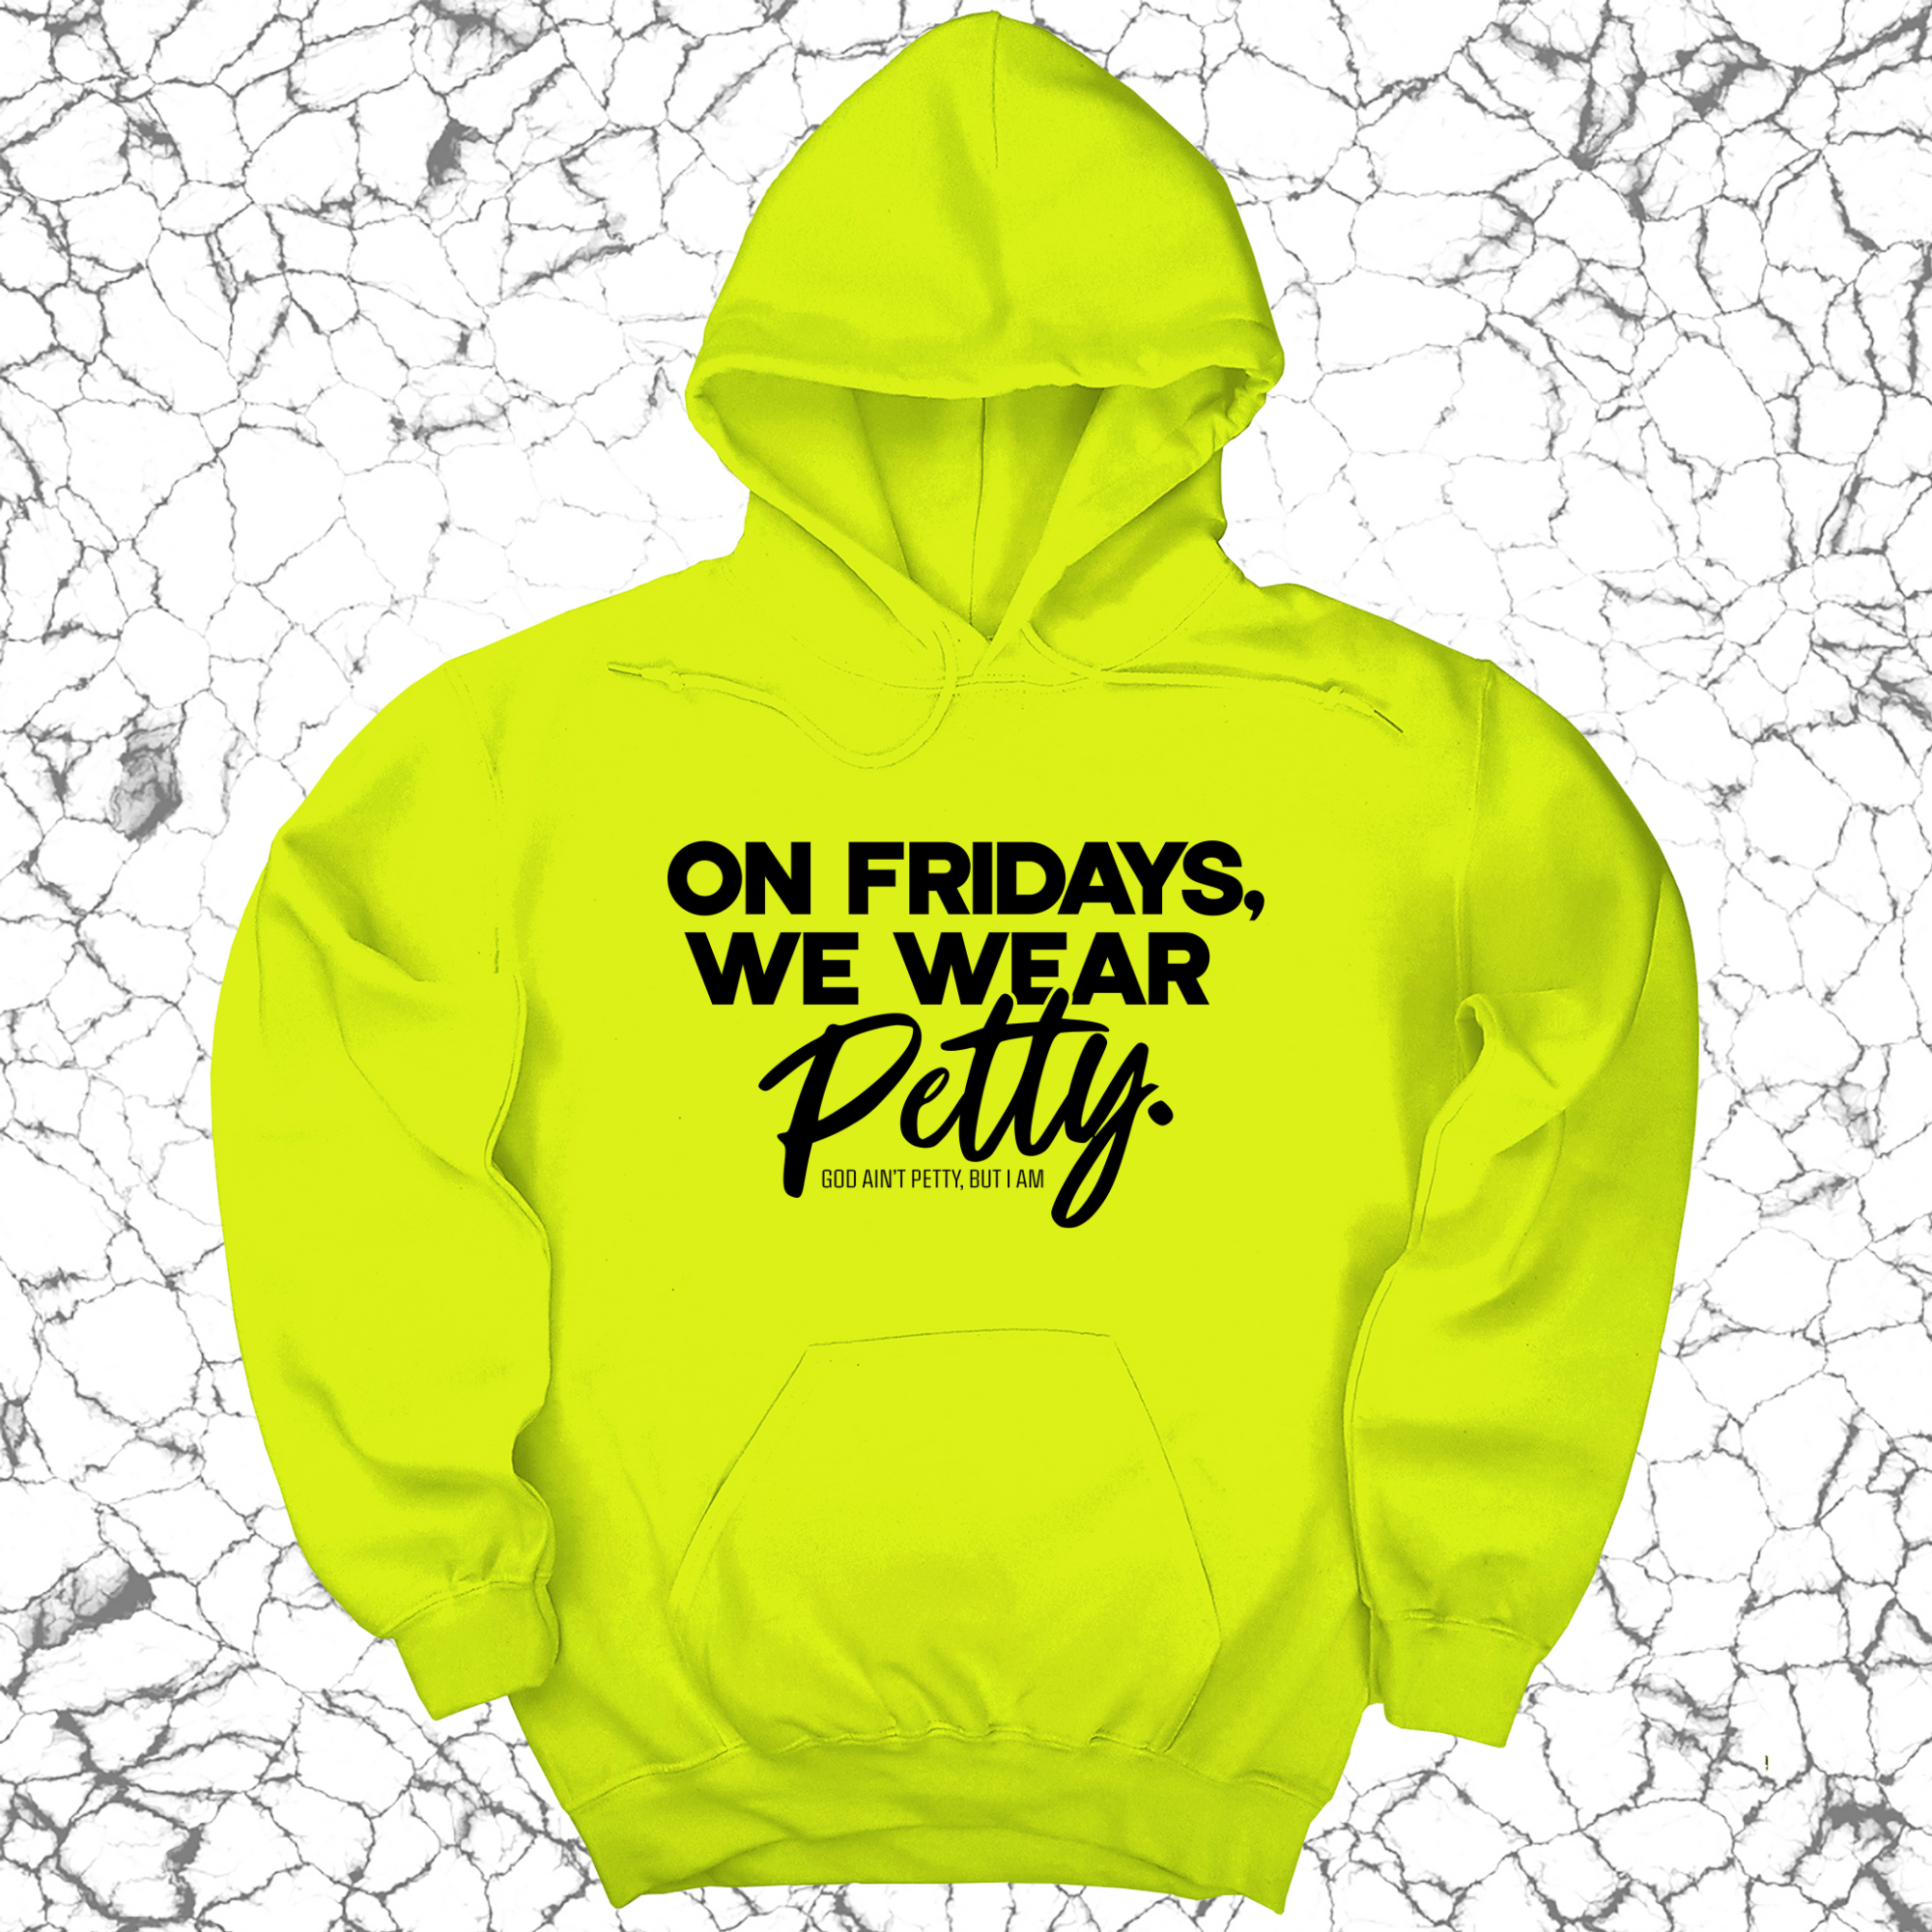 On Fridays we wear petty Unisex Hoodie-Hoodie-The Original God Ain't Petty But I Am